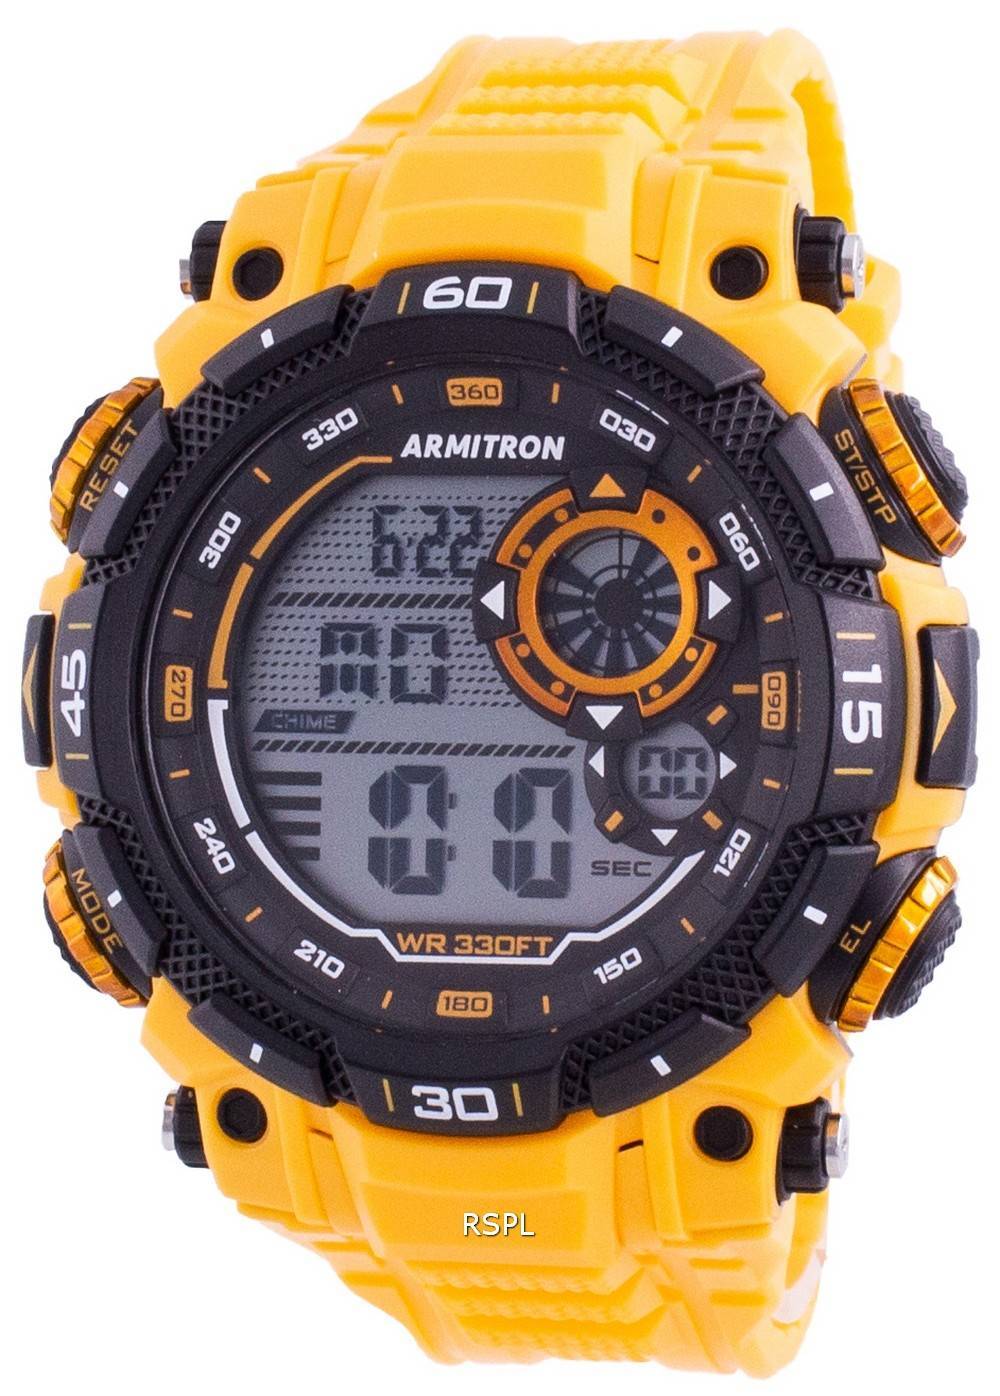 Details more than 136 armitron watch